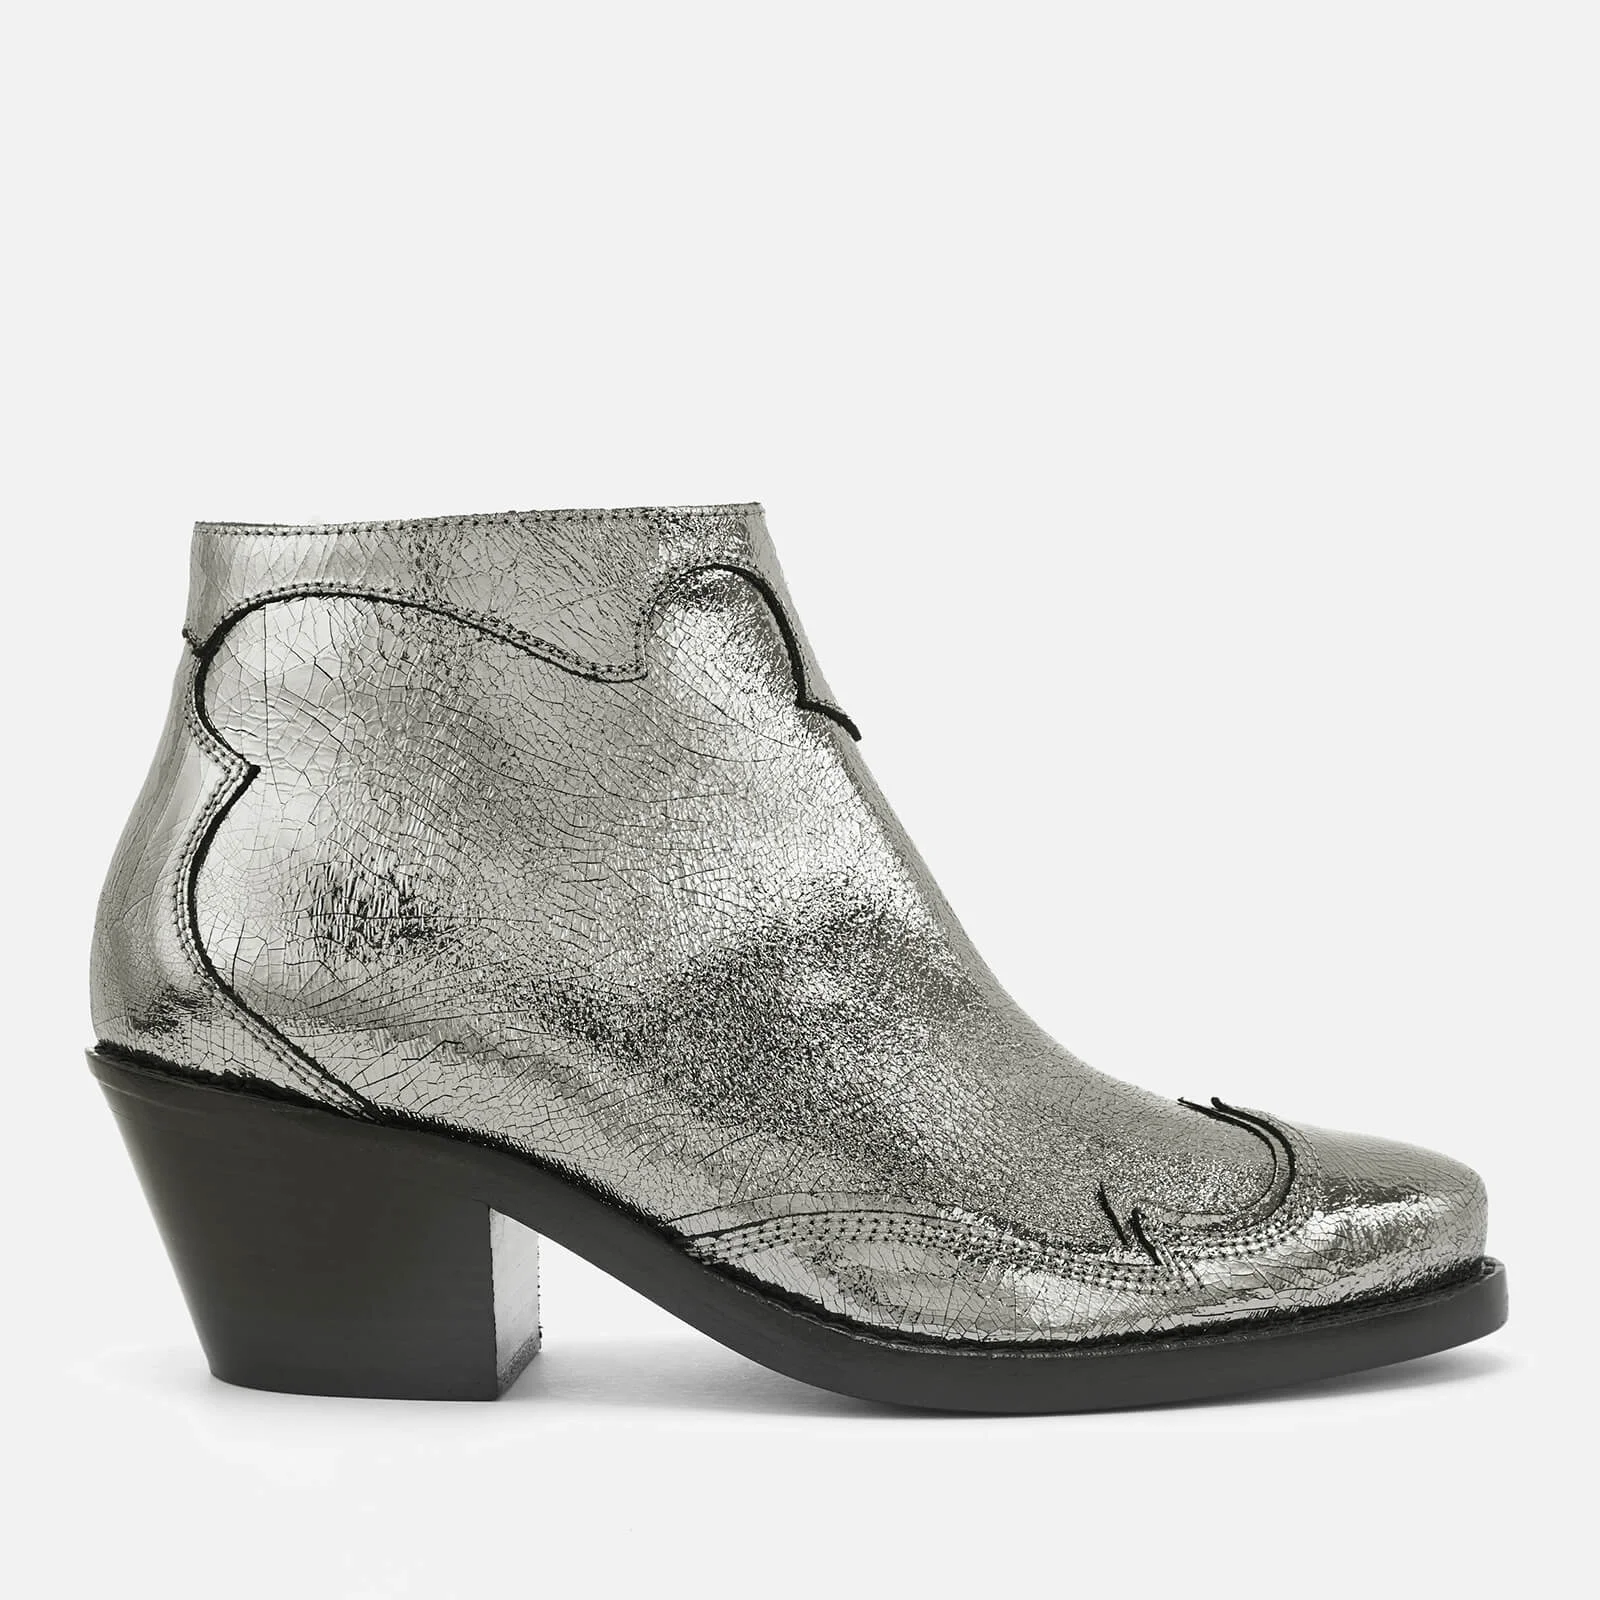 McQ Alexander McQueen Women's New Solstice Zip Ankle Boots - Silver Image 1